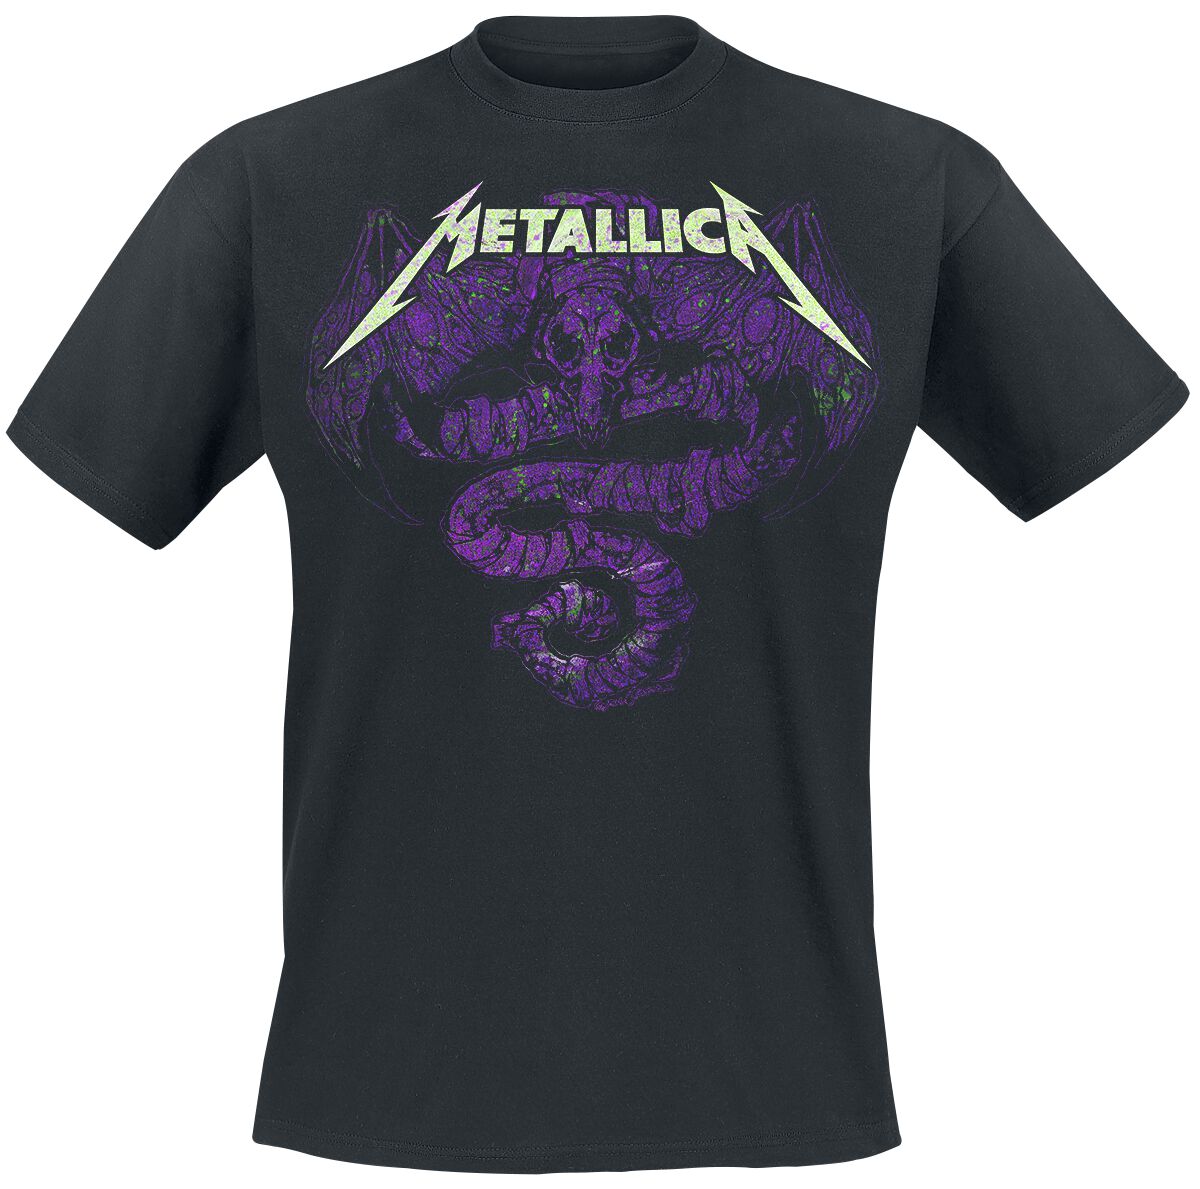 Metallica Roam Oxidized T-Shirt schwarz in L